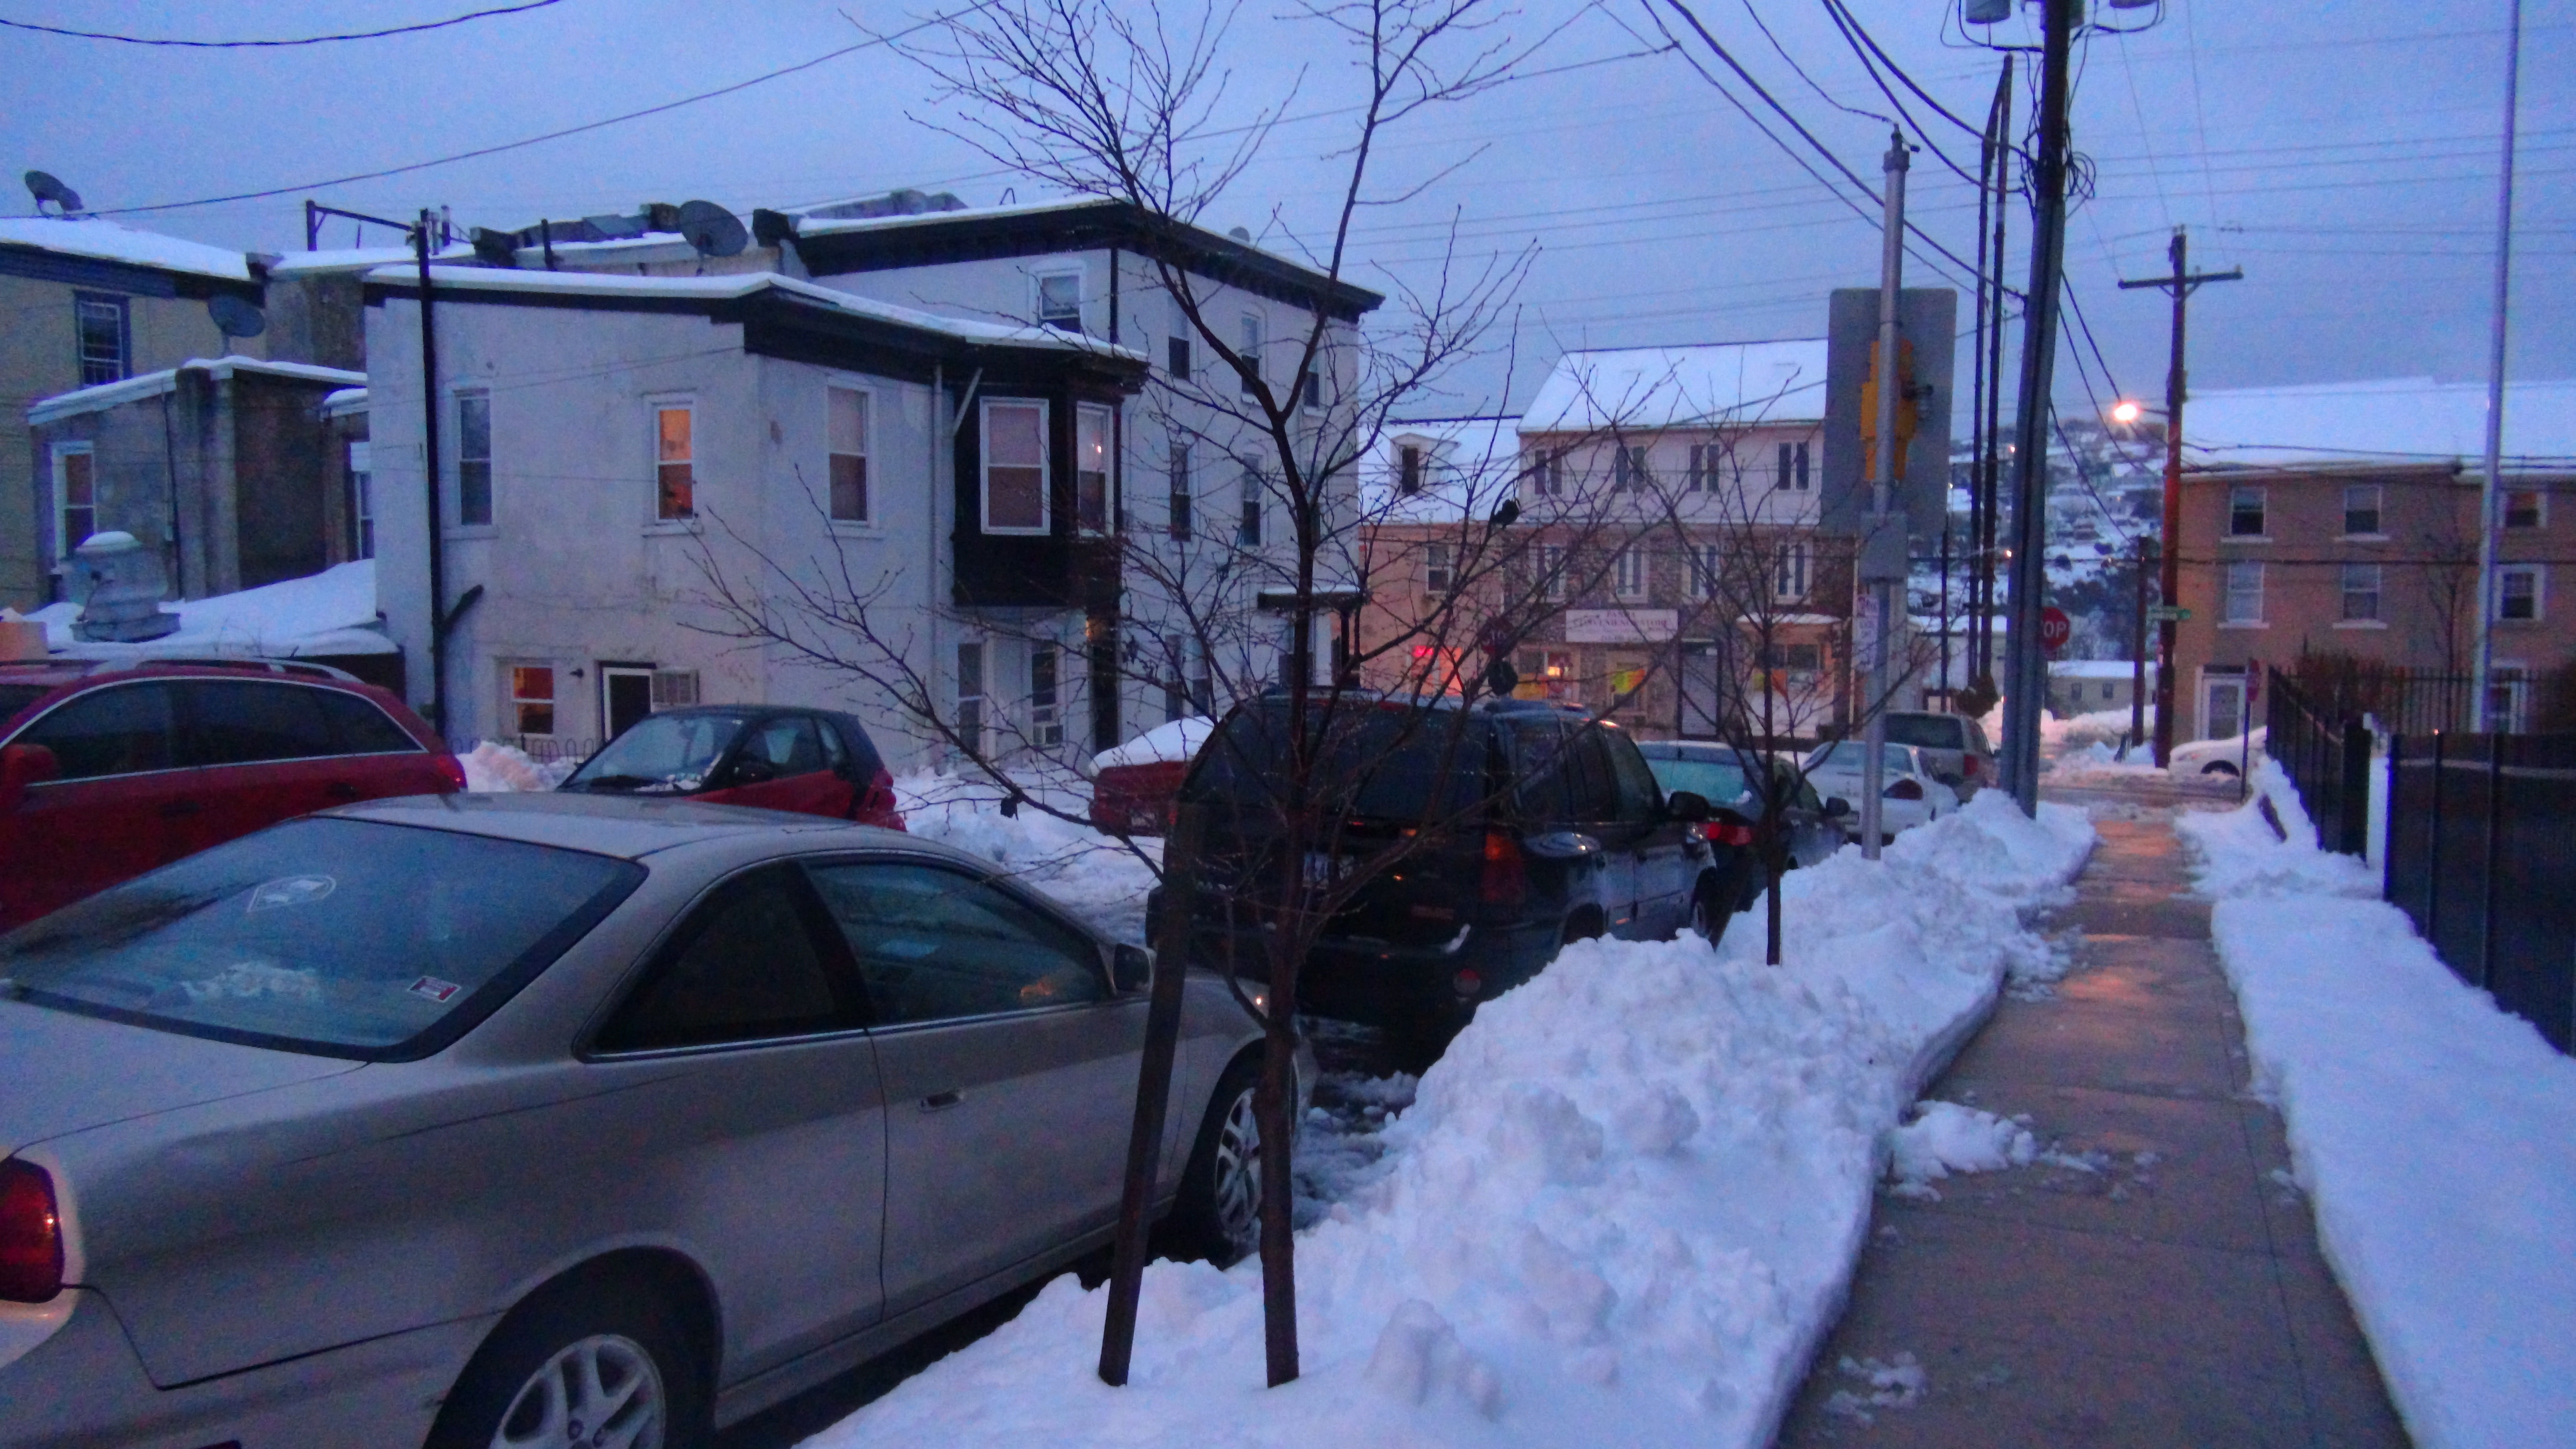 Snow covered street in Manayunk, Philadelphia neighbornhood